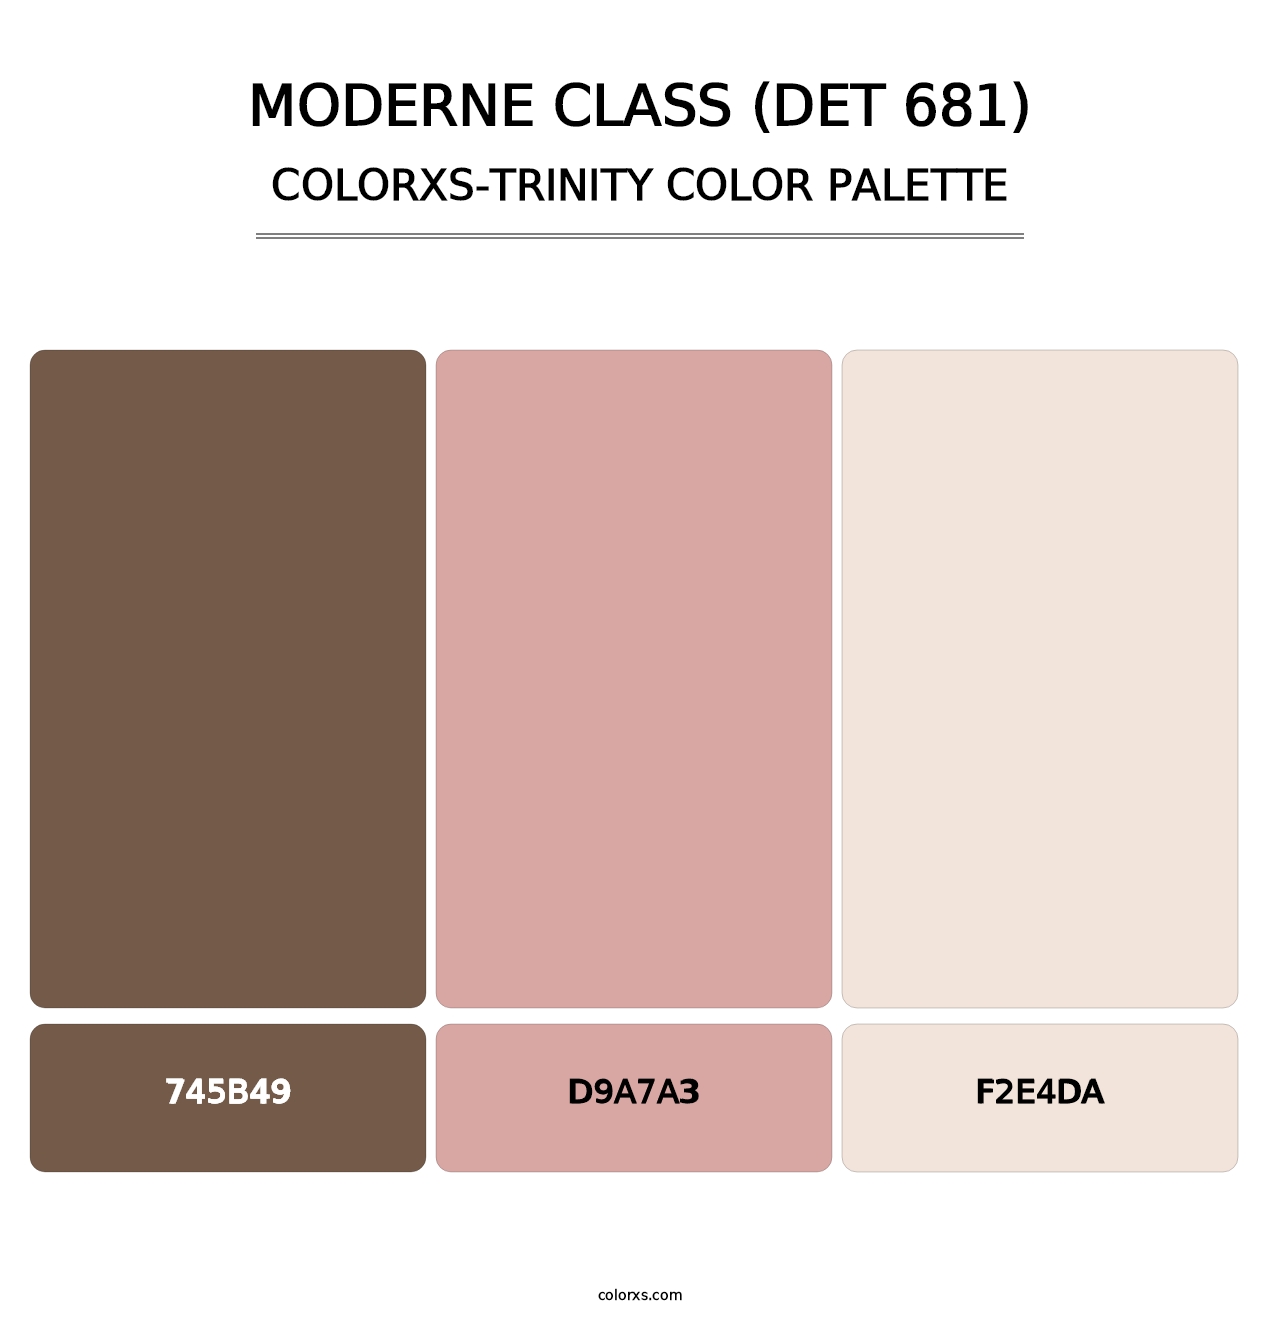 Moderne Class (DET 681) - Colorxs Trinity Palette